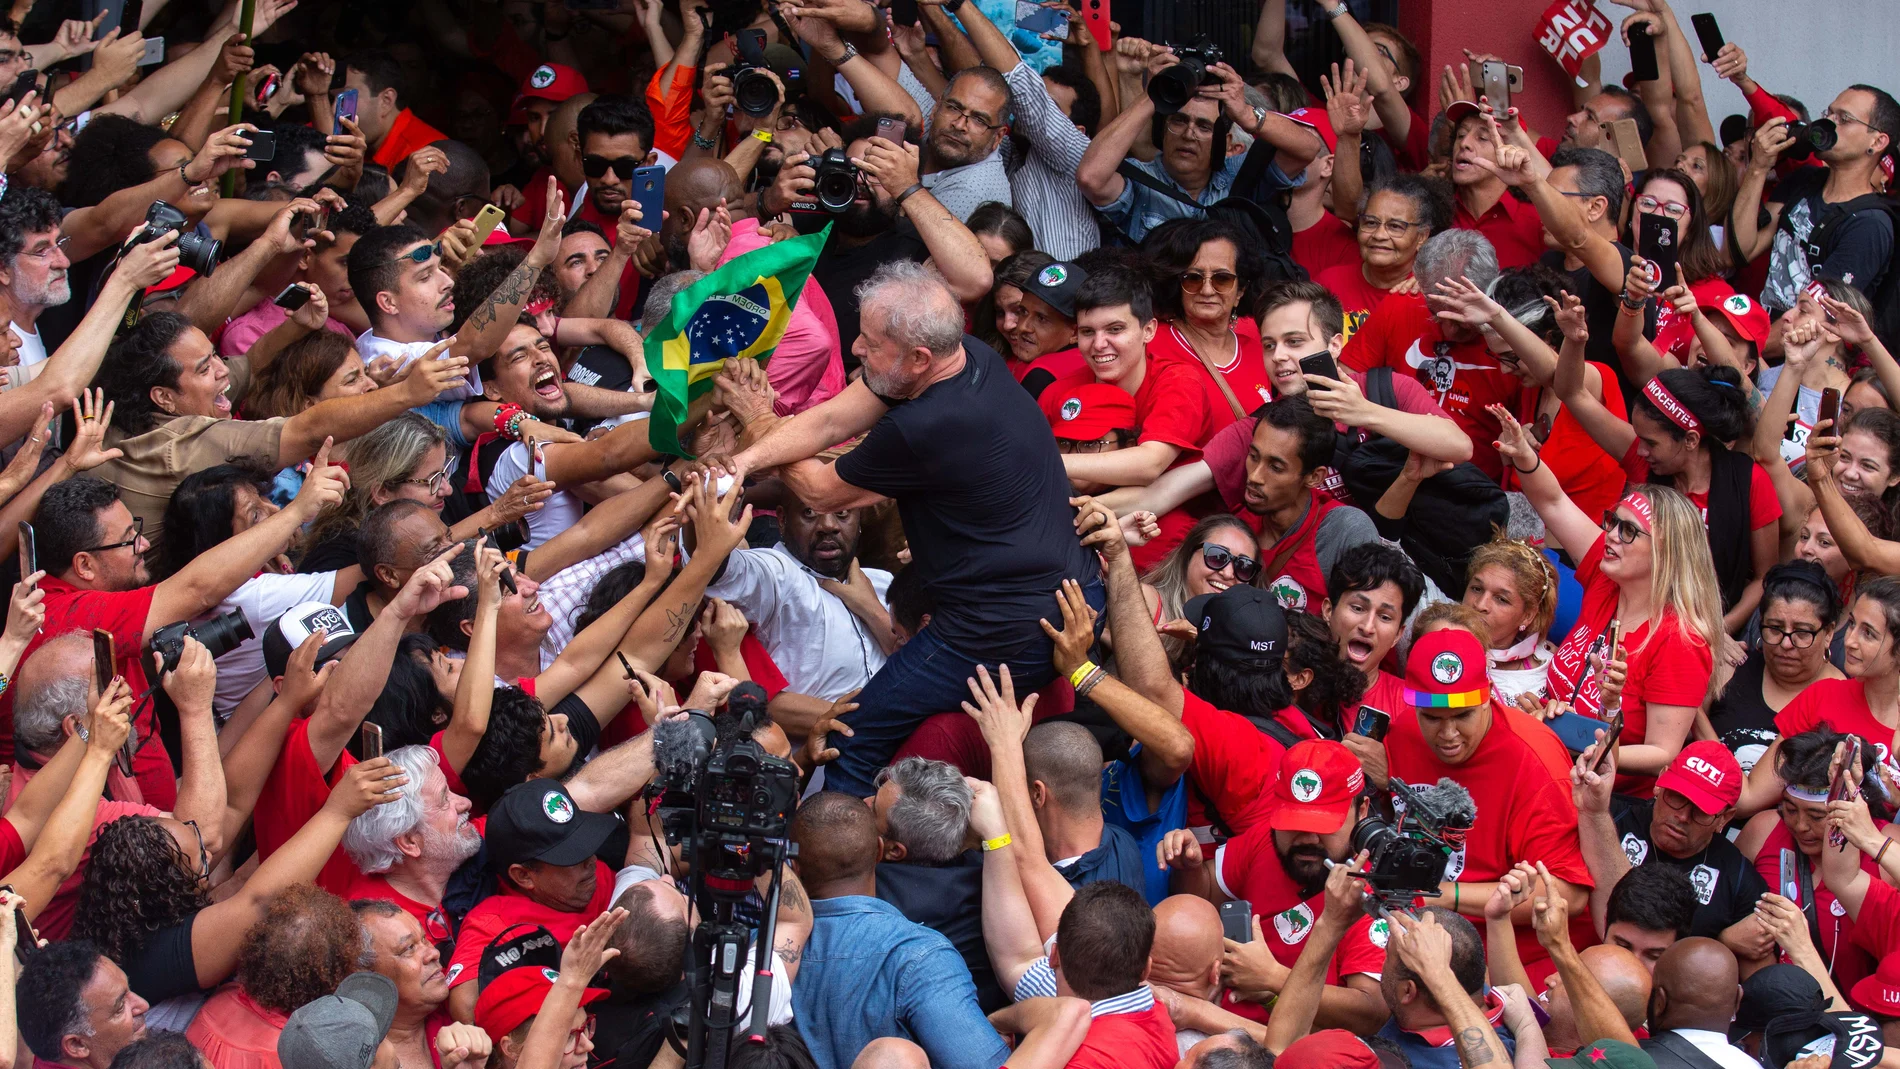 Former Brazilian President Lula da Silva released from prison